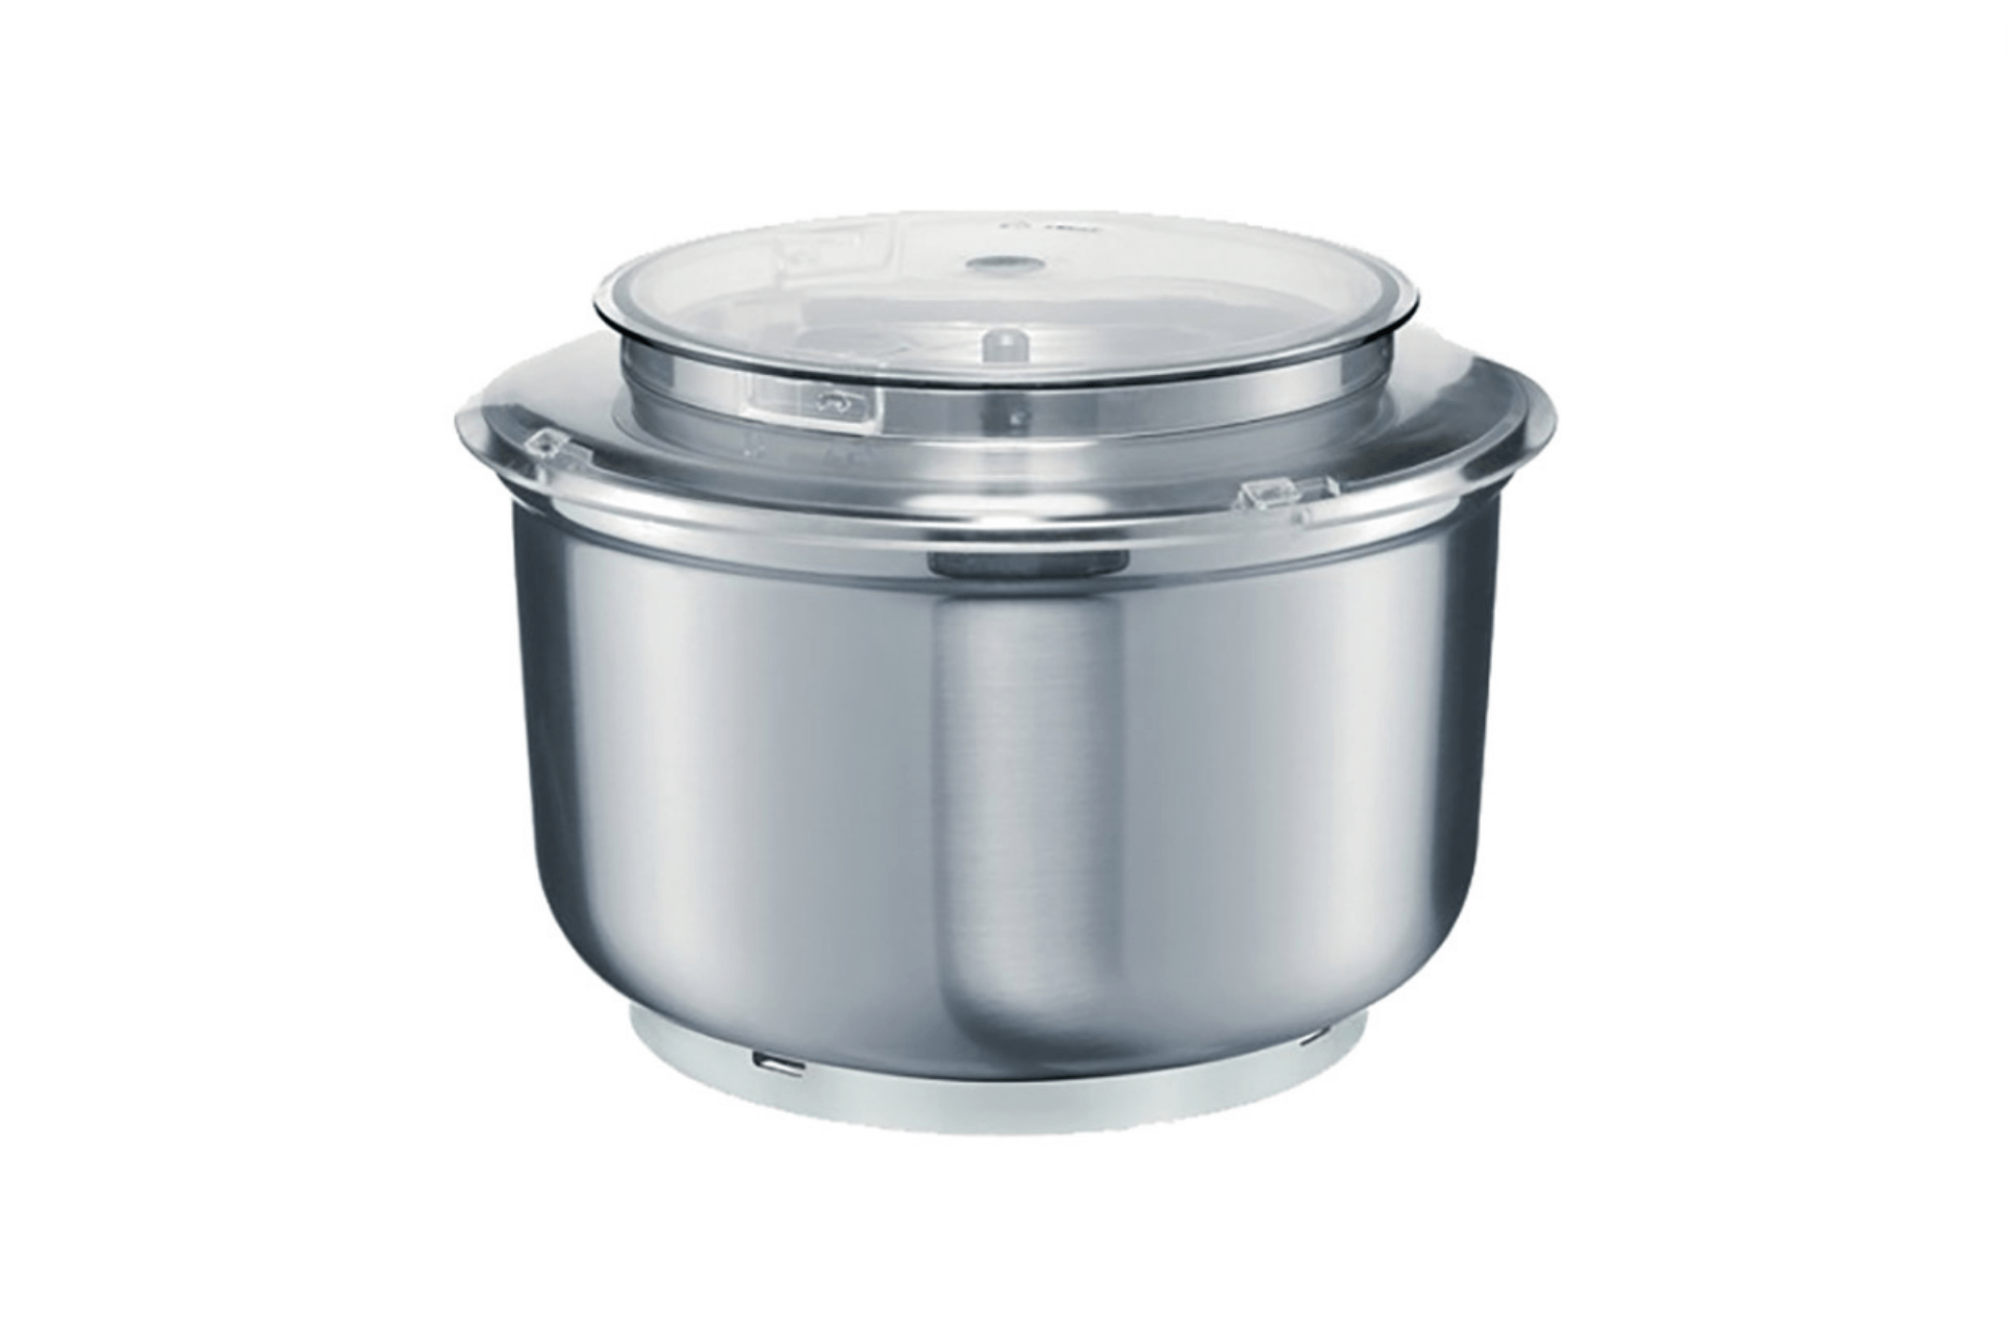 Splash Ring for Bosch Universal Plus Mixer Bowl